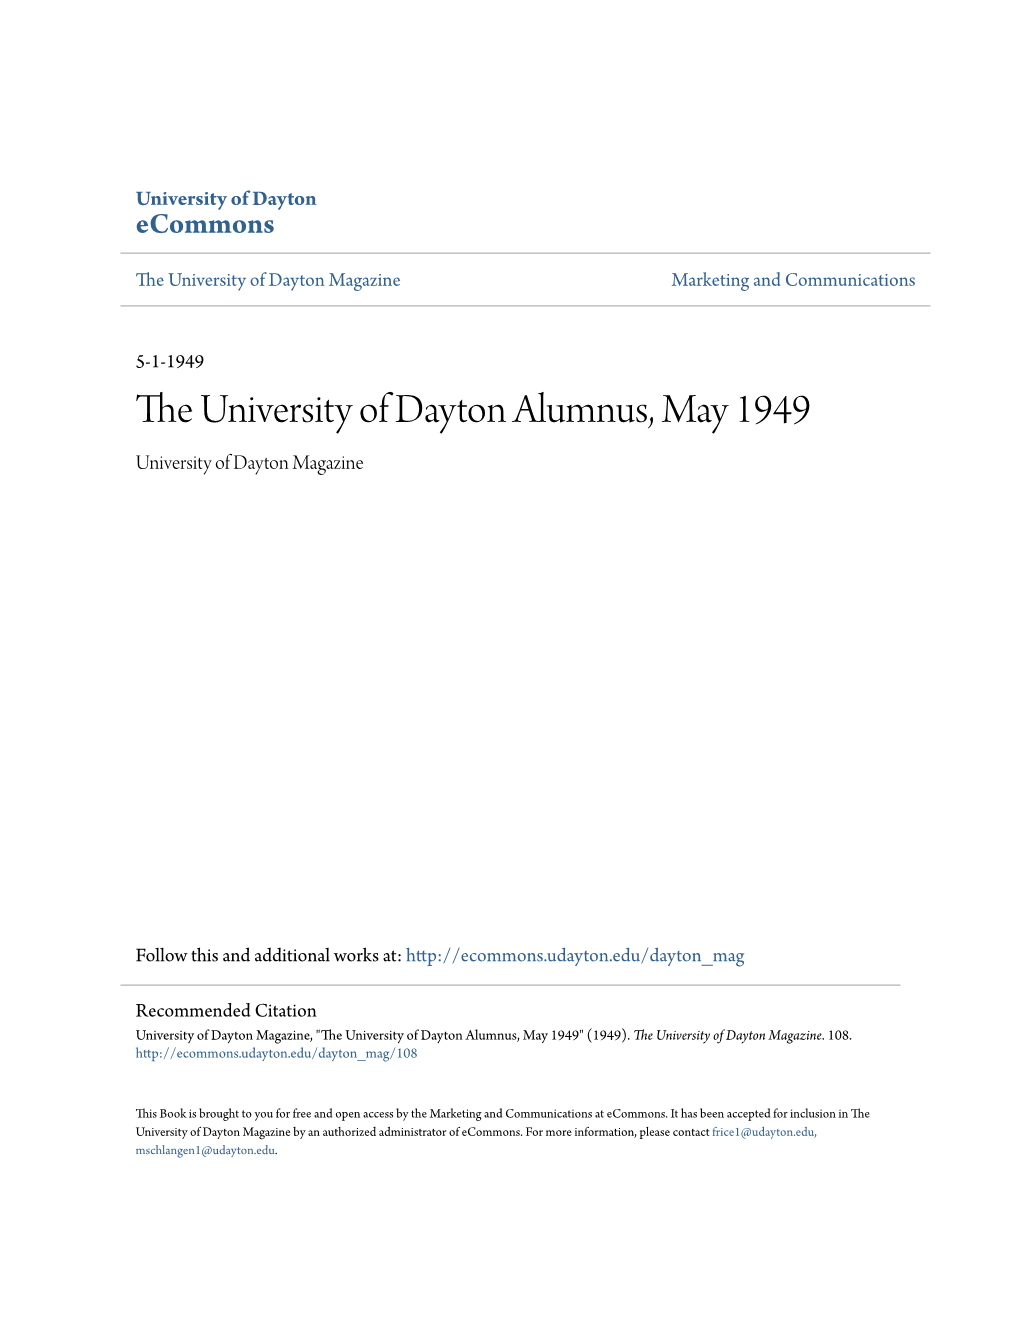 The University of Dayton Alumnus, May 1949